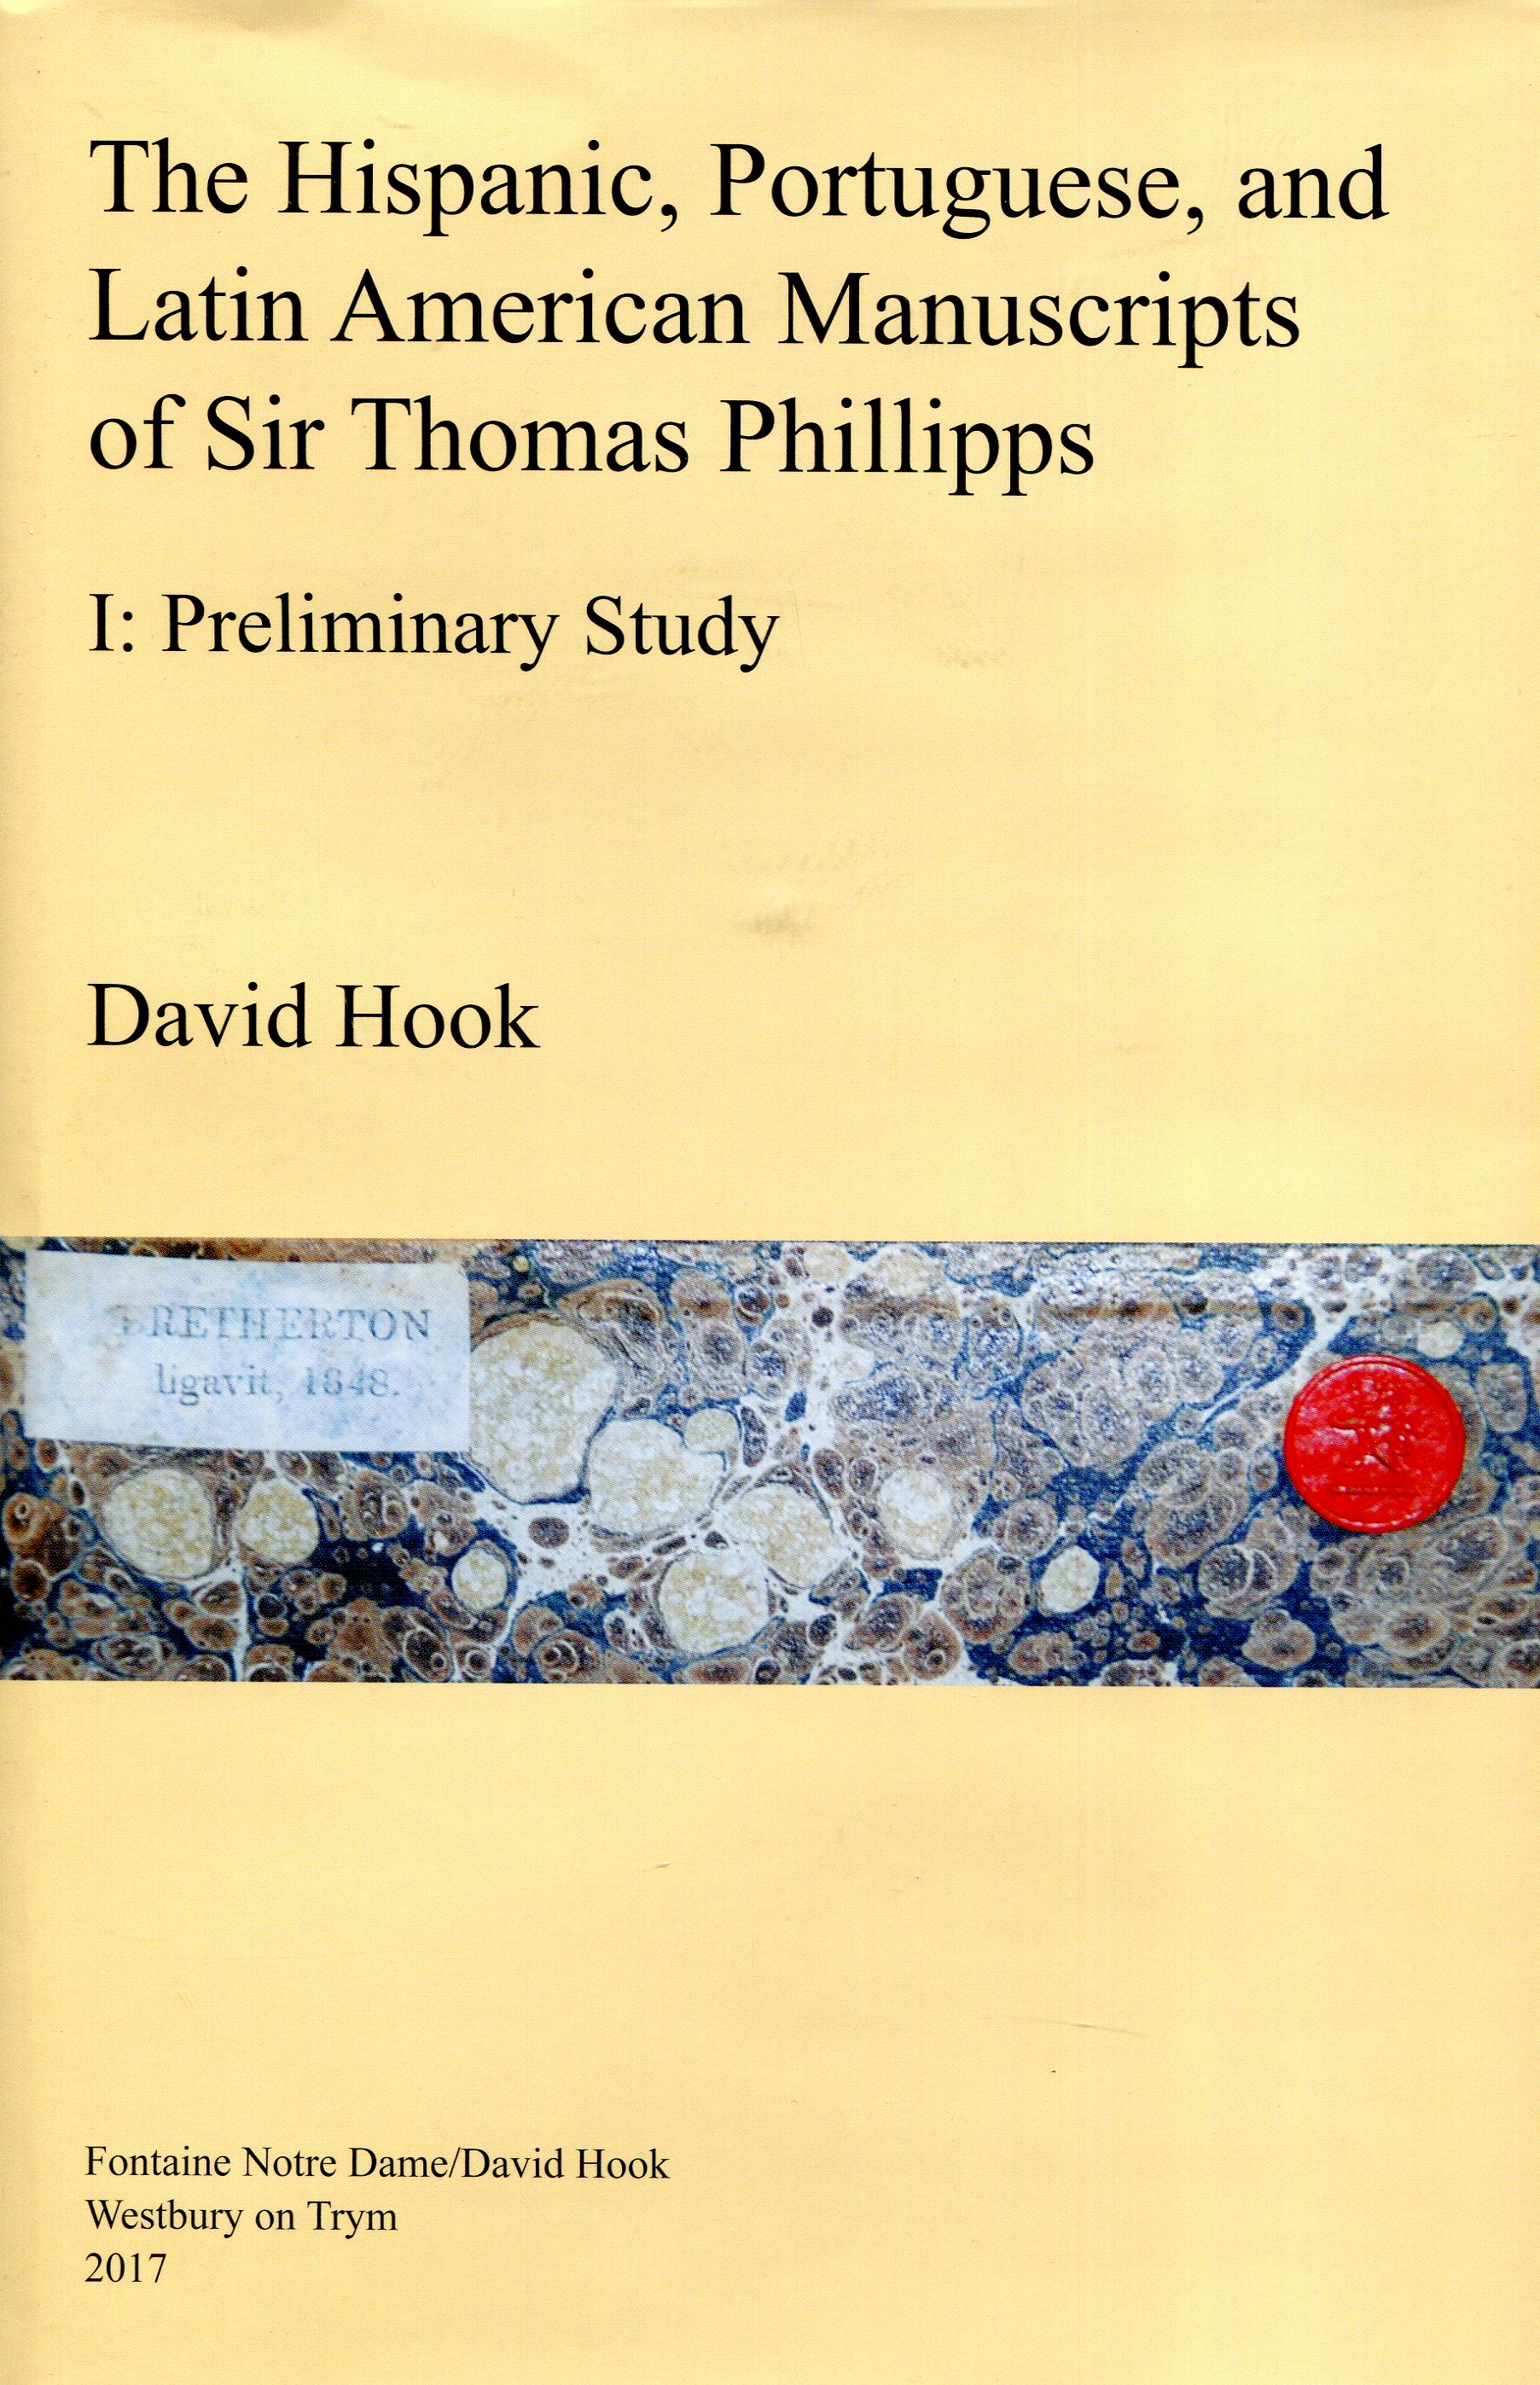 The hispanic, portuguese, and latin american manuscripts of Sir Thomas Phillipps